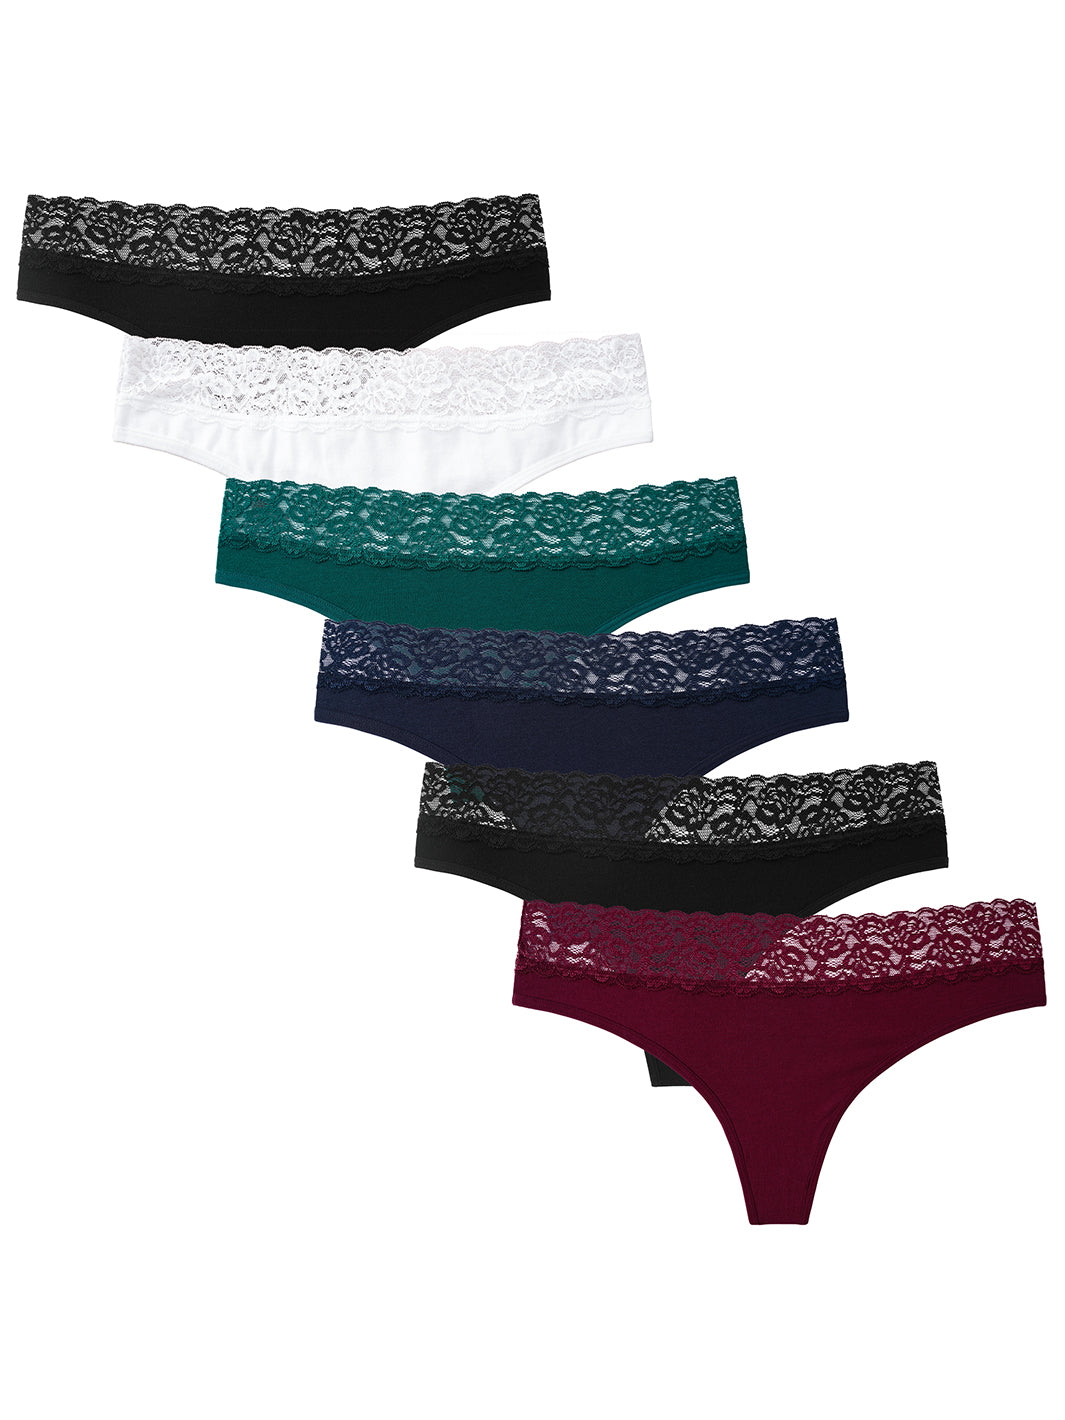 Ayshie Women's Floral Lace Thong Panties Ladies 6-Pack Sexy Low